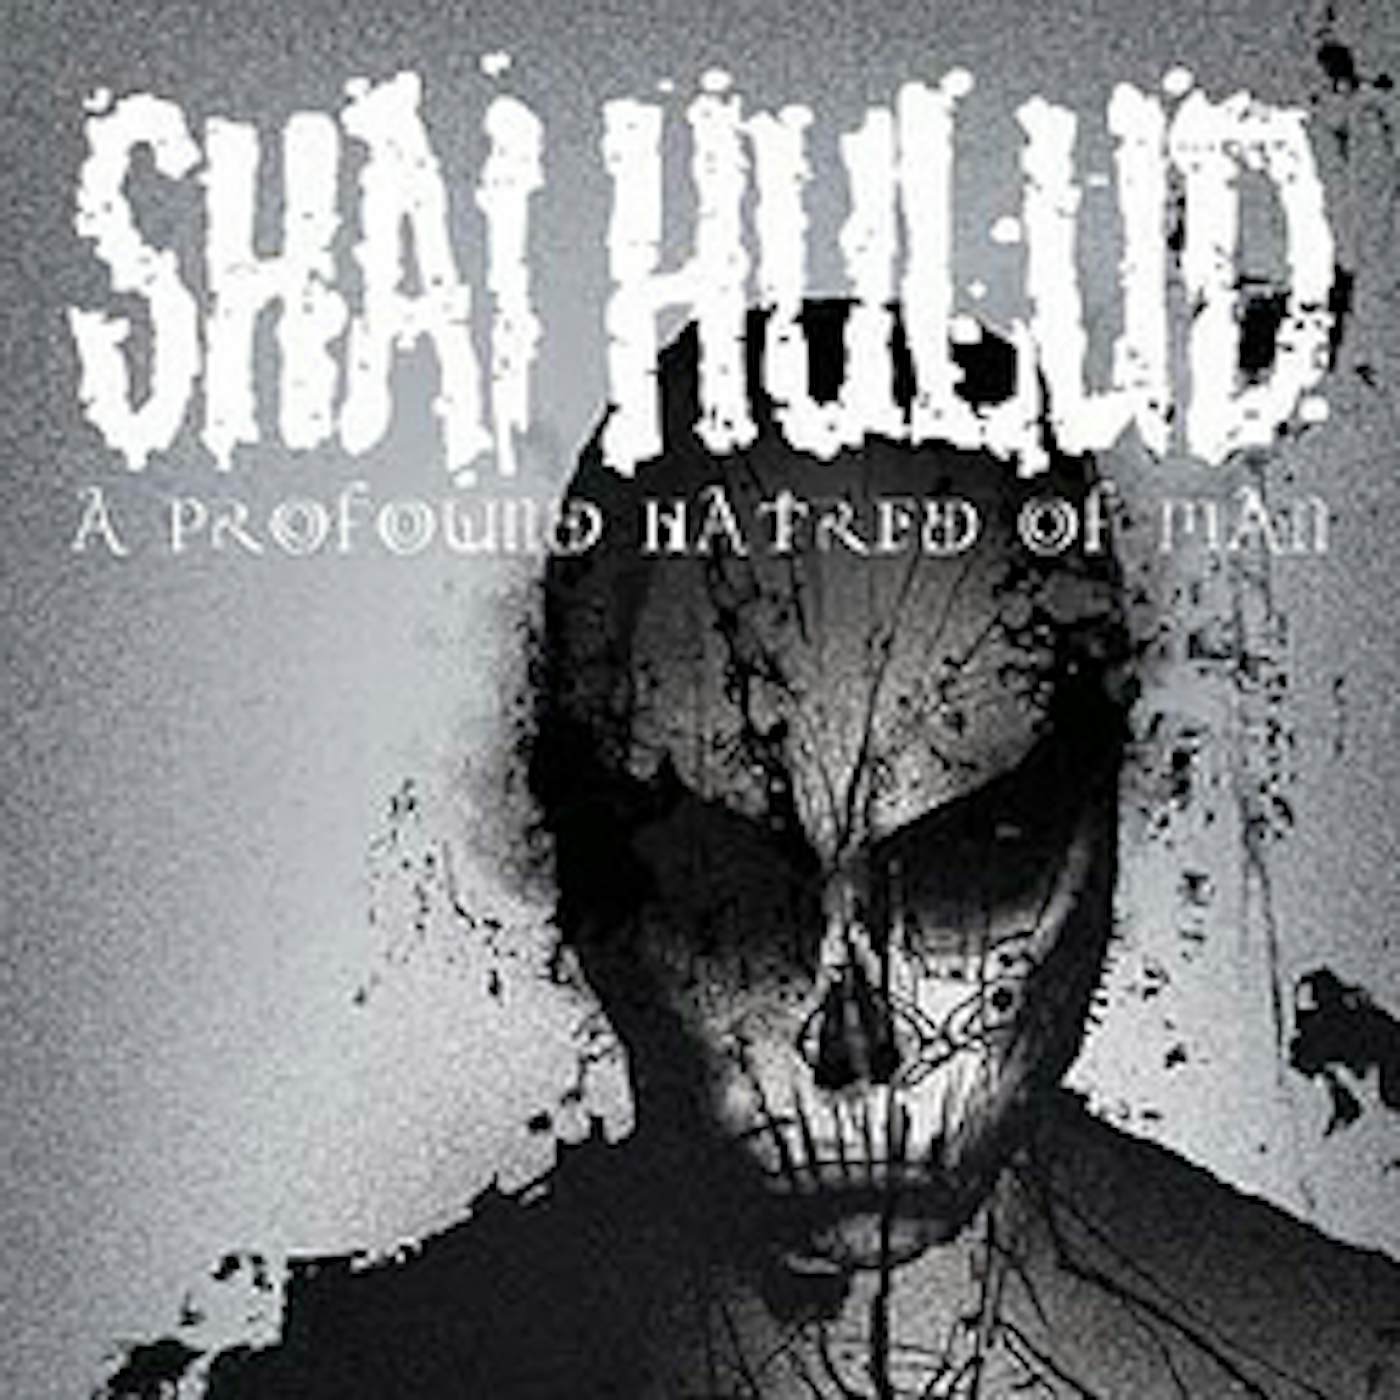 Shai Hulud PROFOUND HATRED OF MAN Vinyl Record